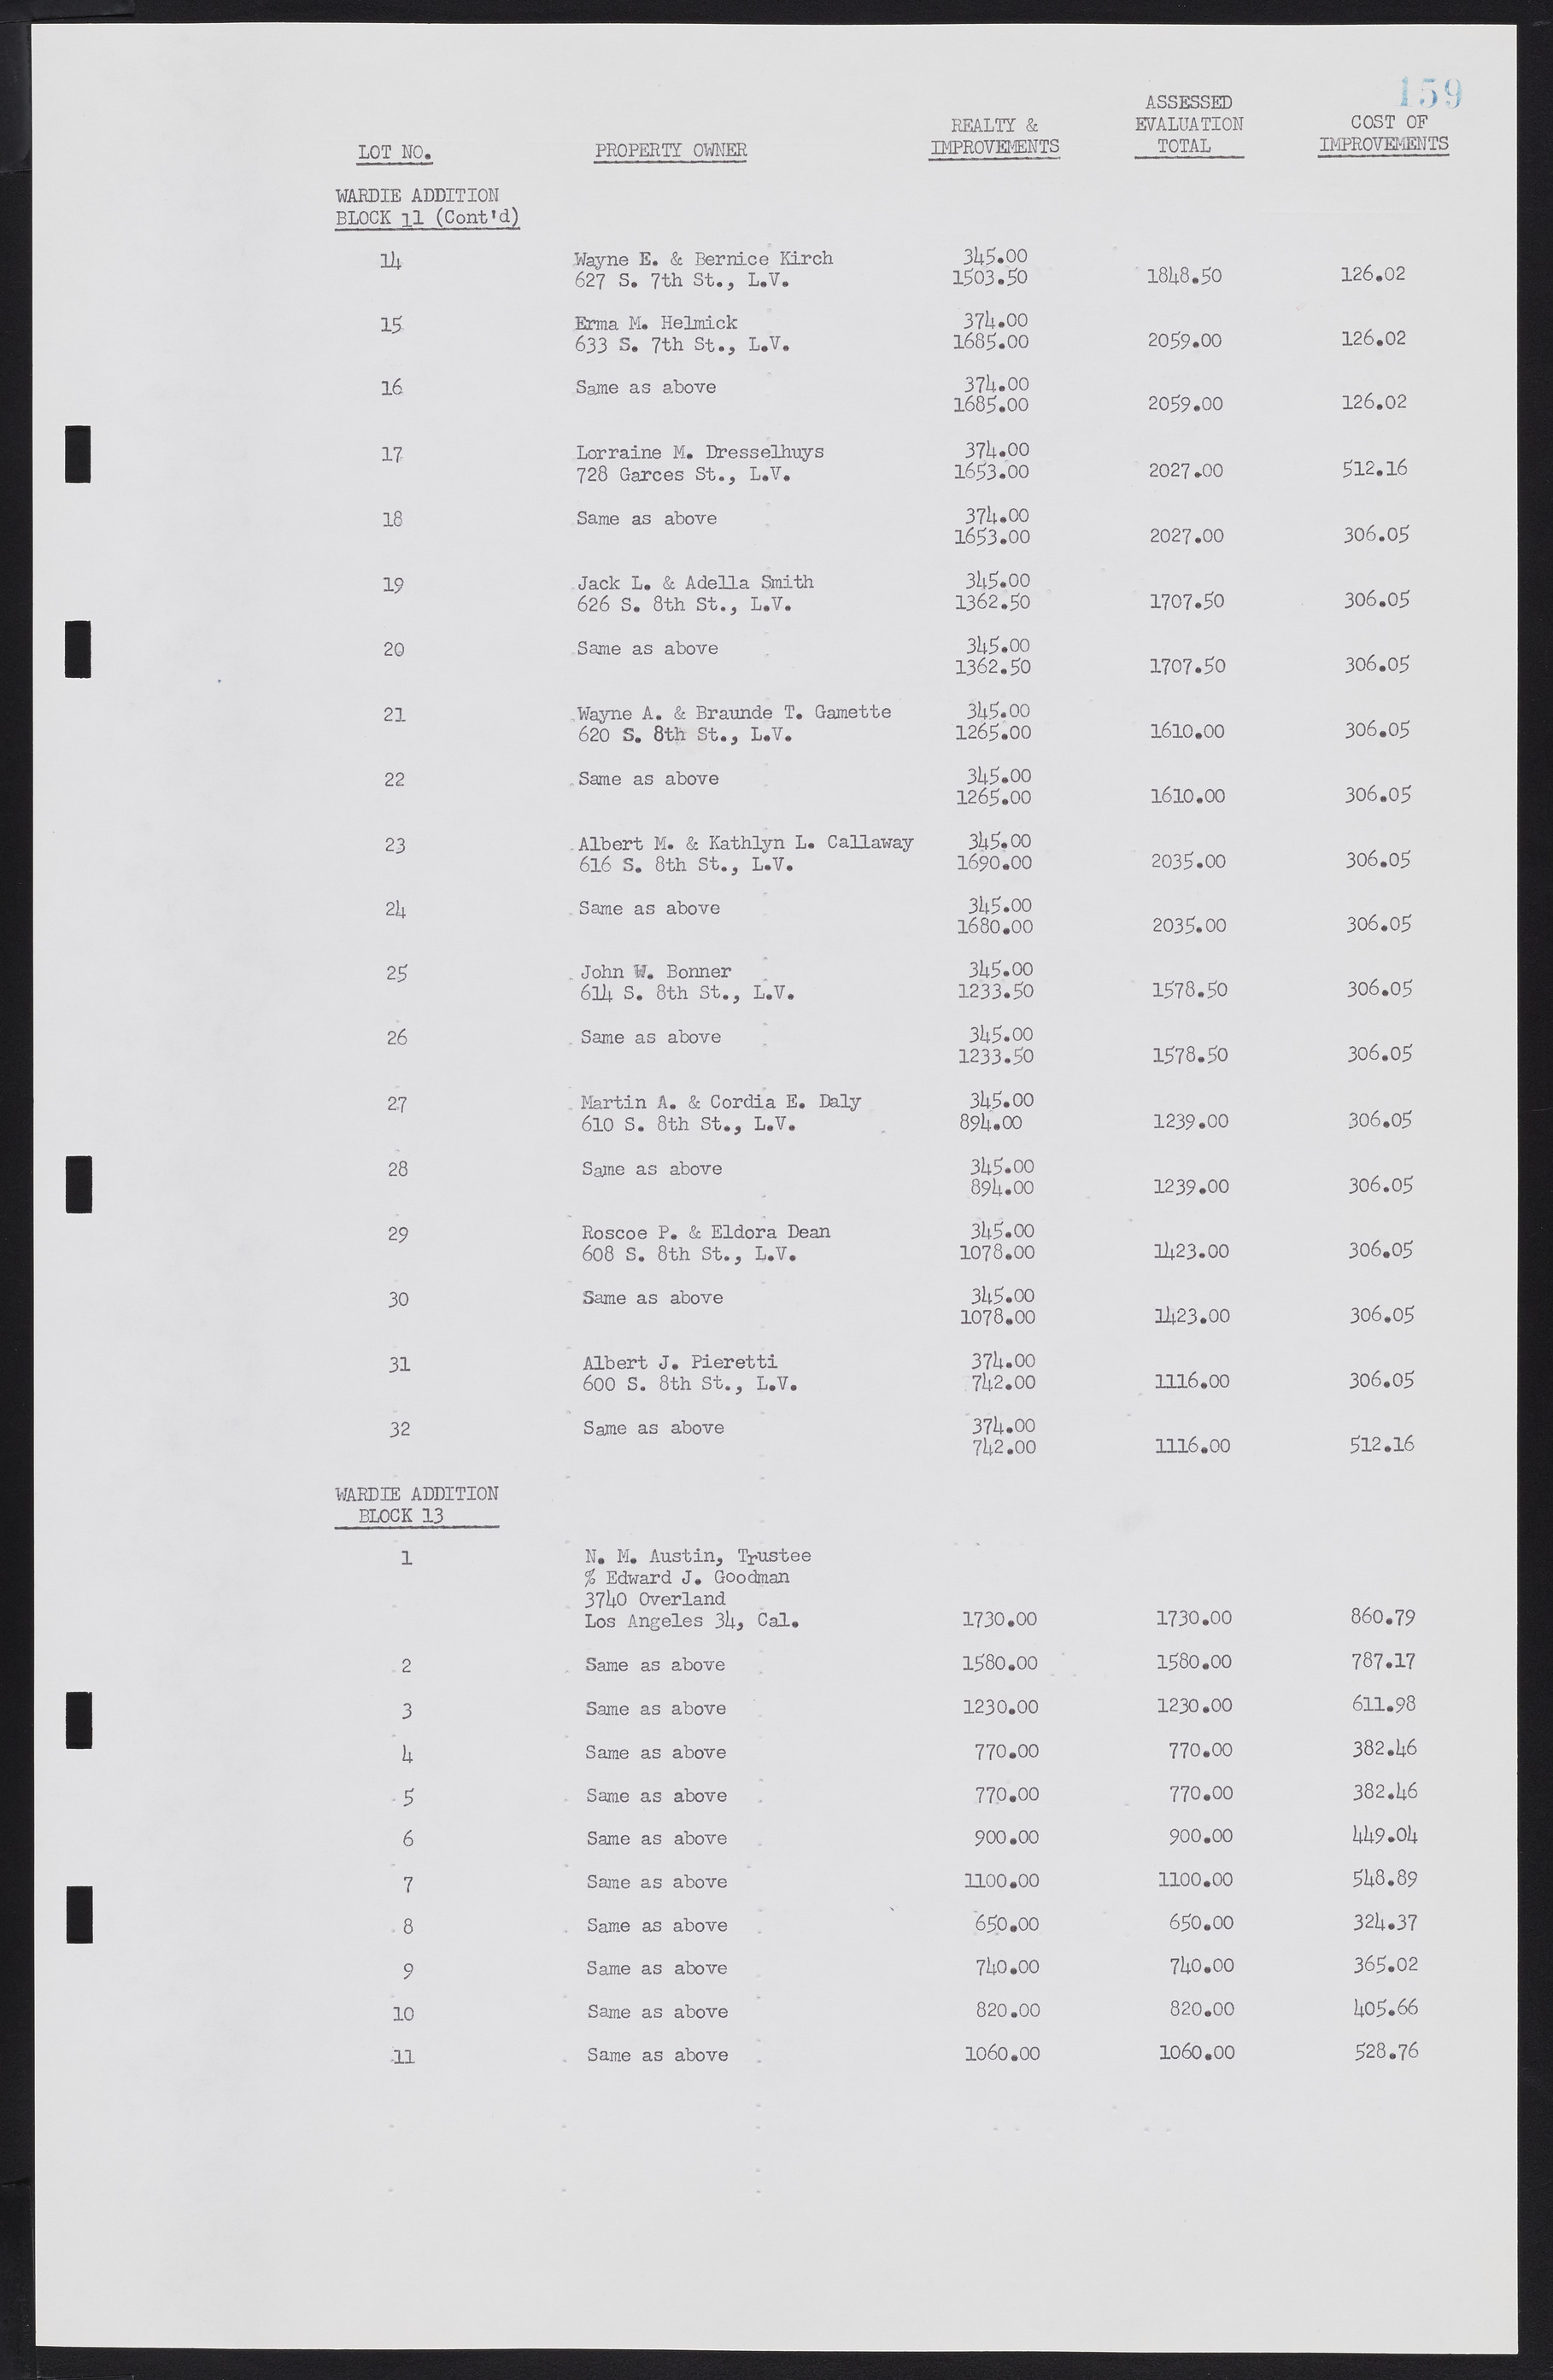 Las Vegas City Commission Minutes, February 17, 1954 to September 21, 1955, lvc000009-165